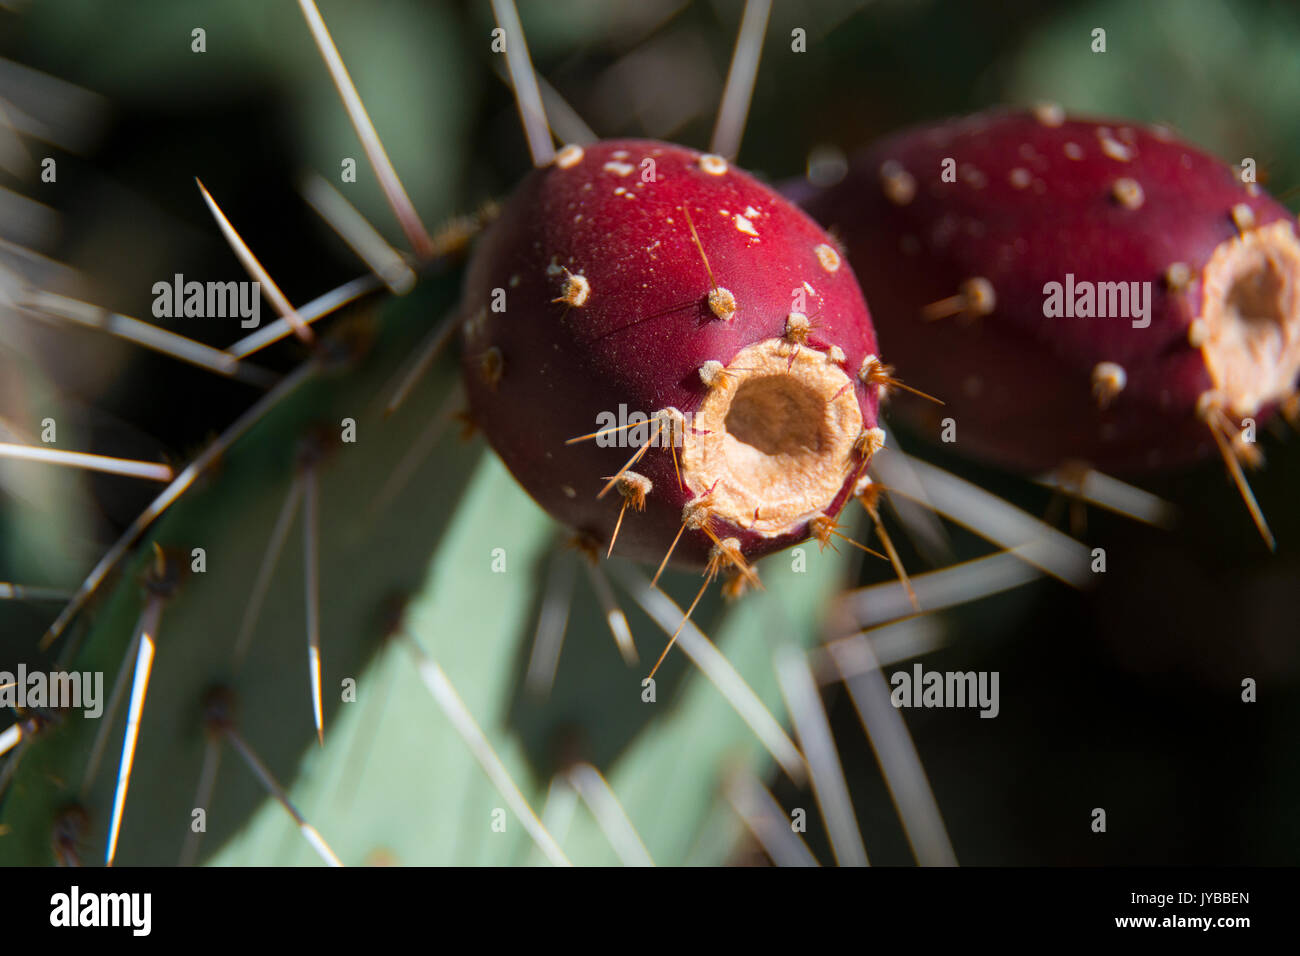 Prickly Fruit Stock Photo